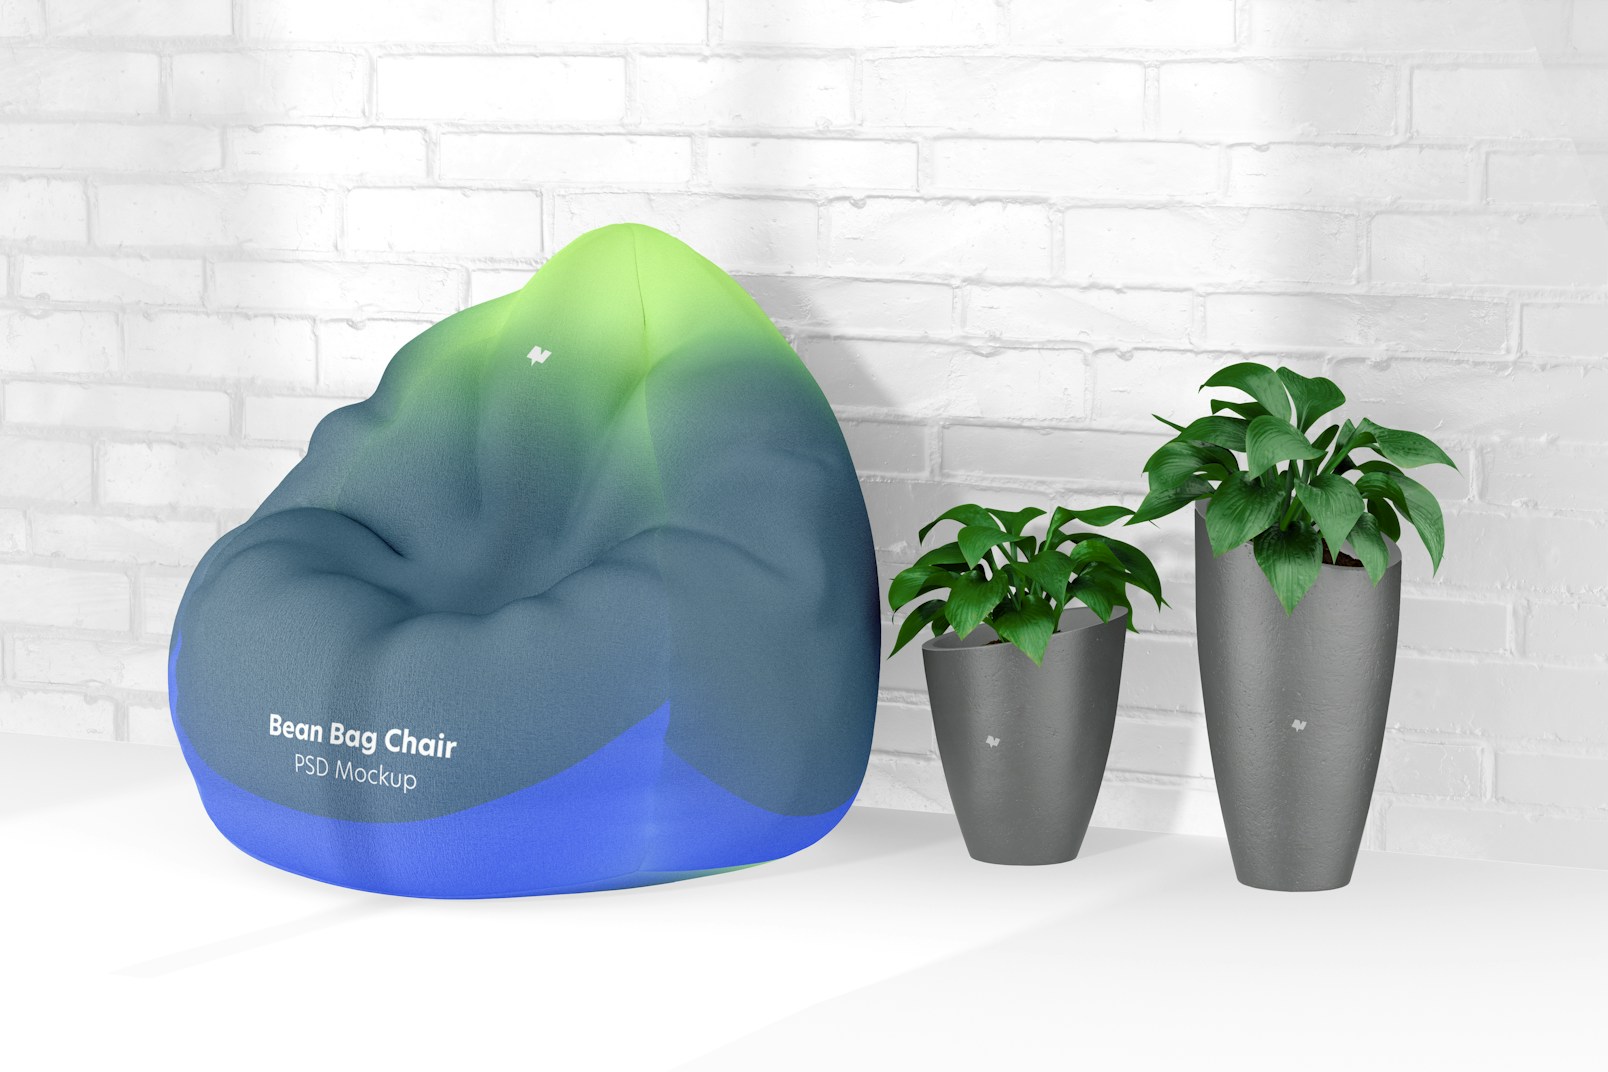 Bean Bag Chair with Plants Mockup